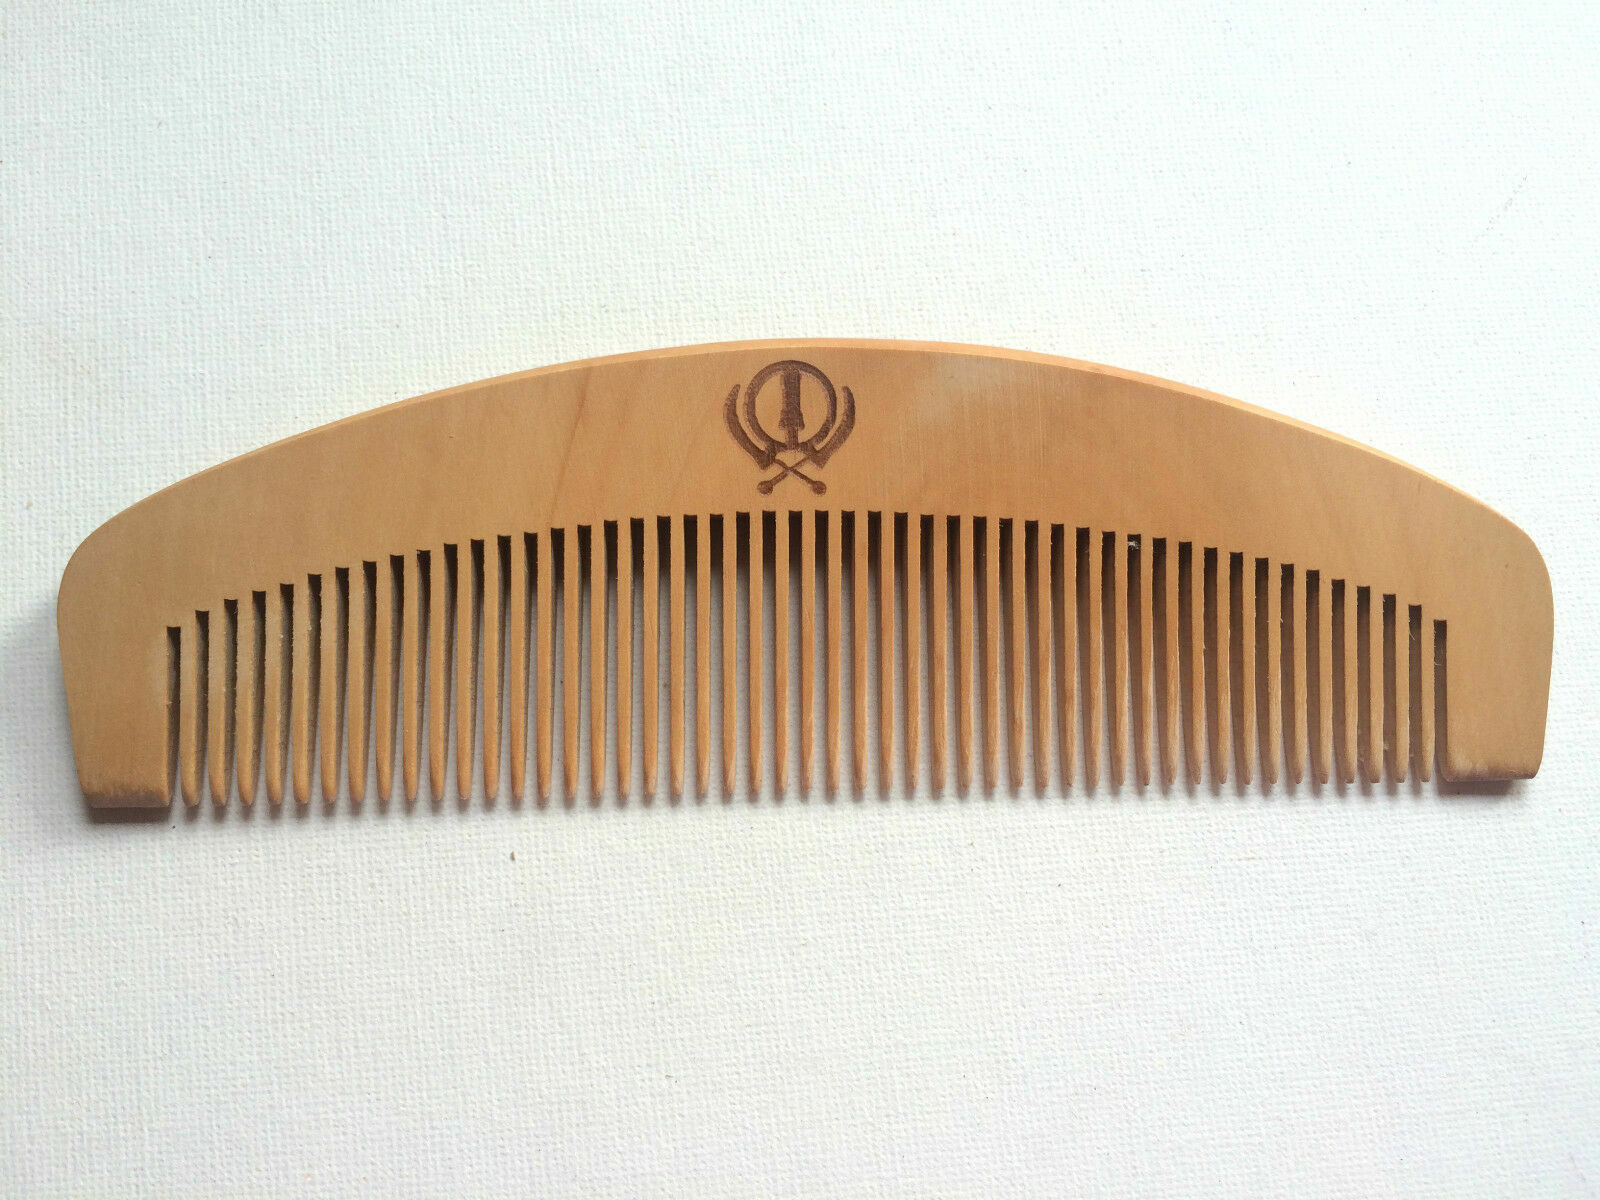 Primary image for Sikh Kanga Khalsa Singh Wooden Comb Premium Quality Khanda Print Wooden Comb 107